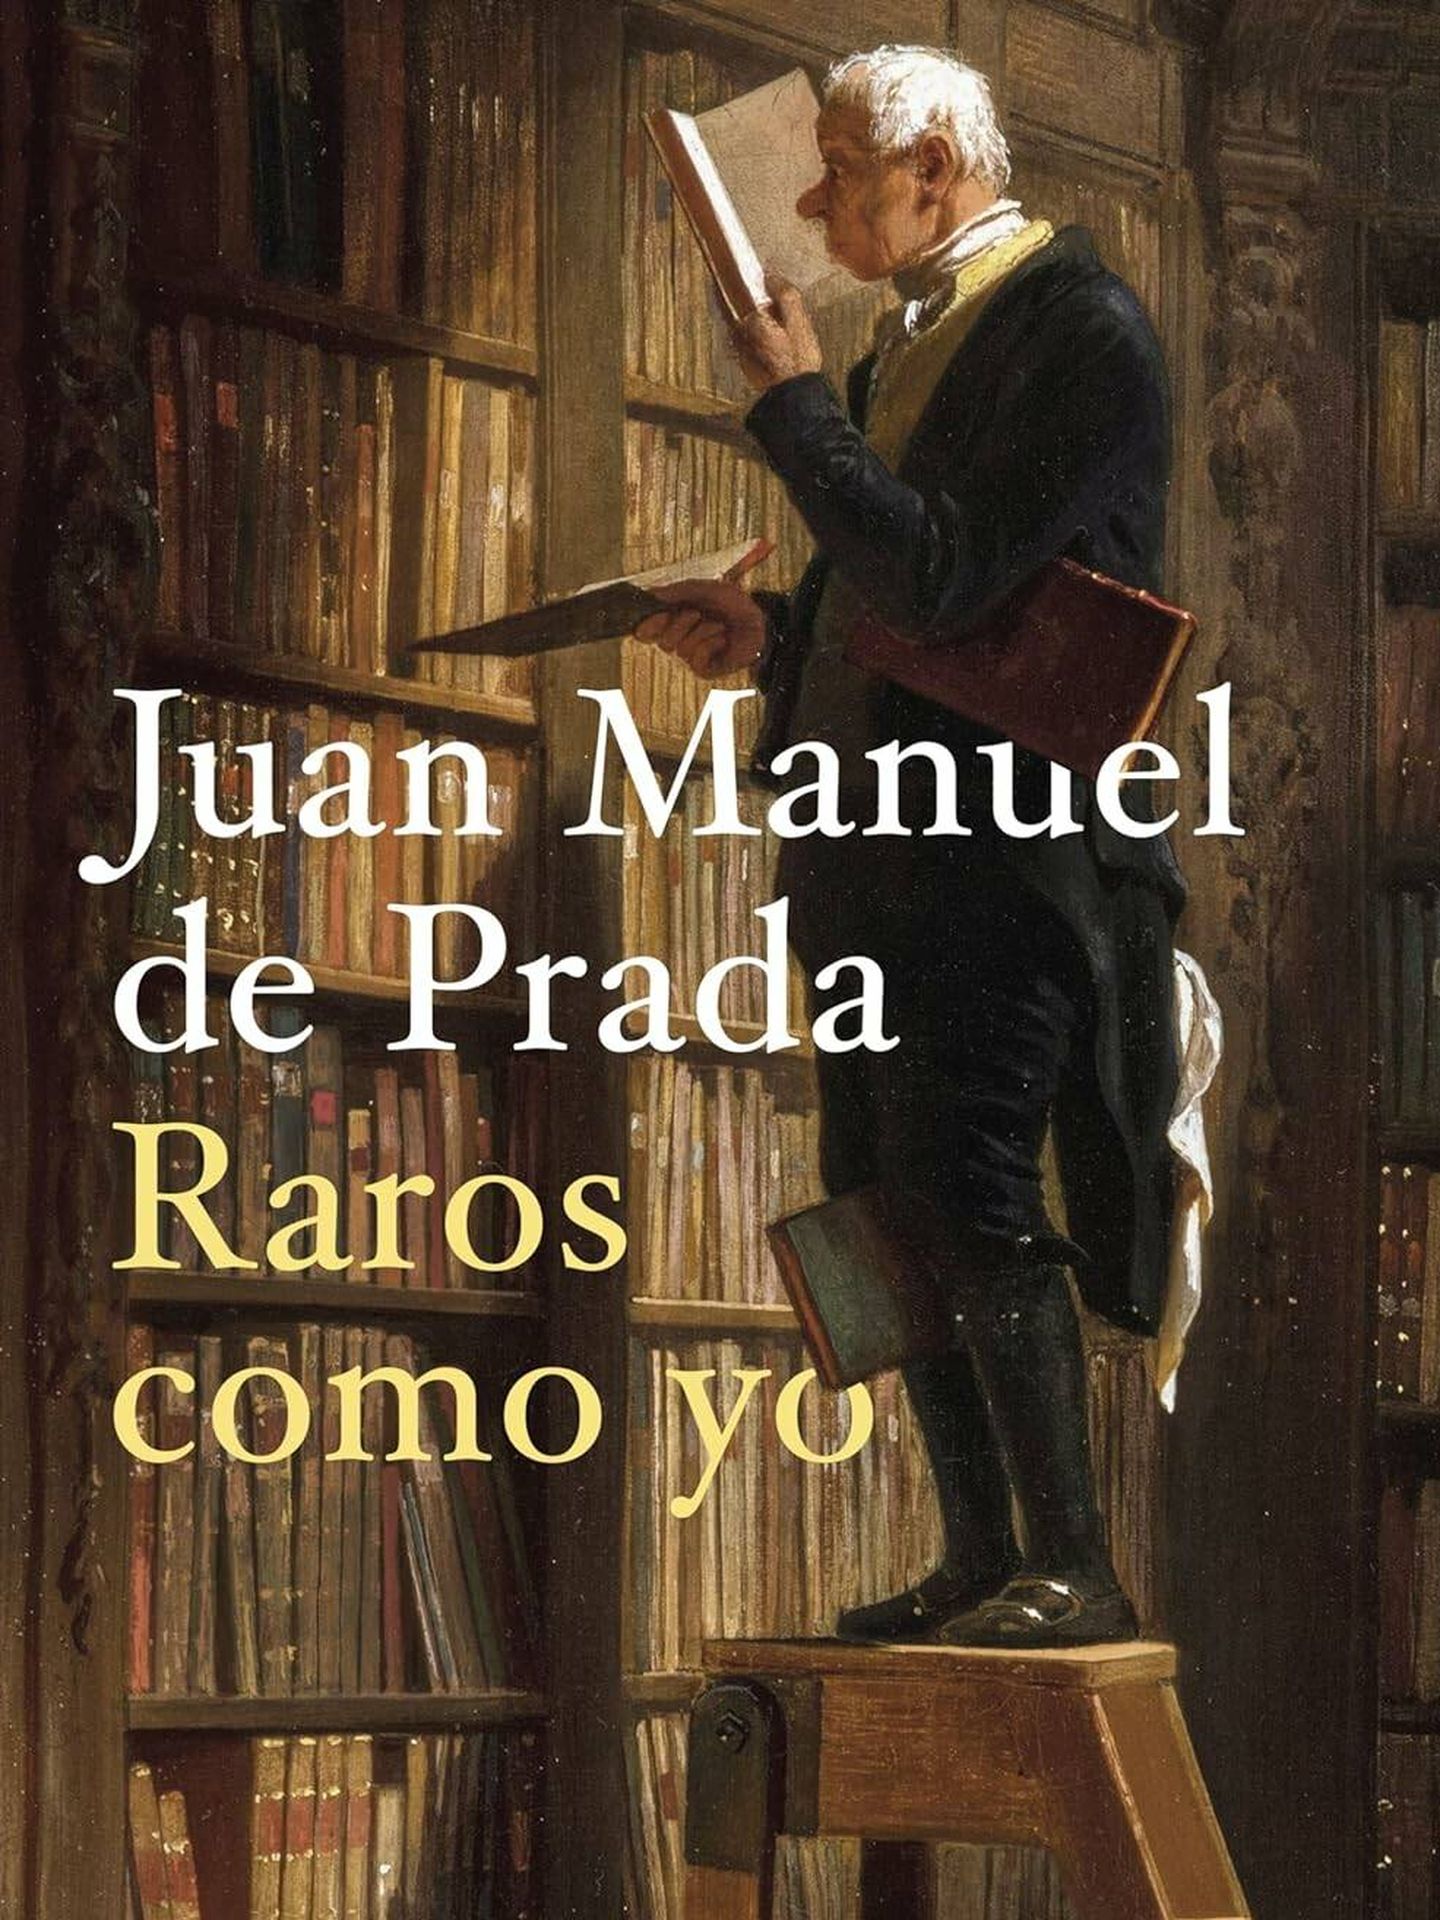 'Raros como yo', de Juan Manuel de Prada.